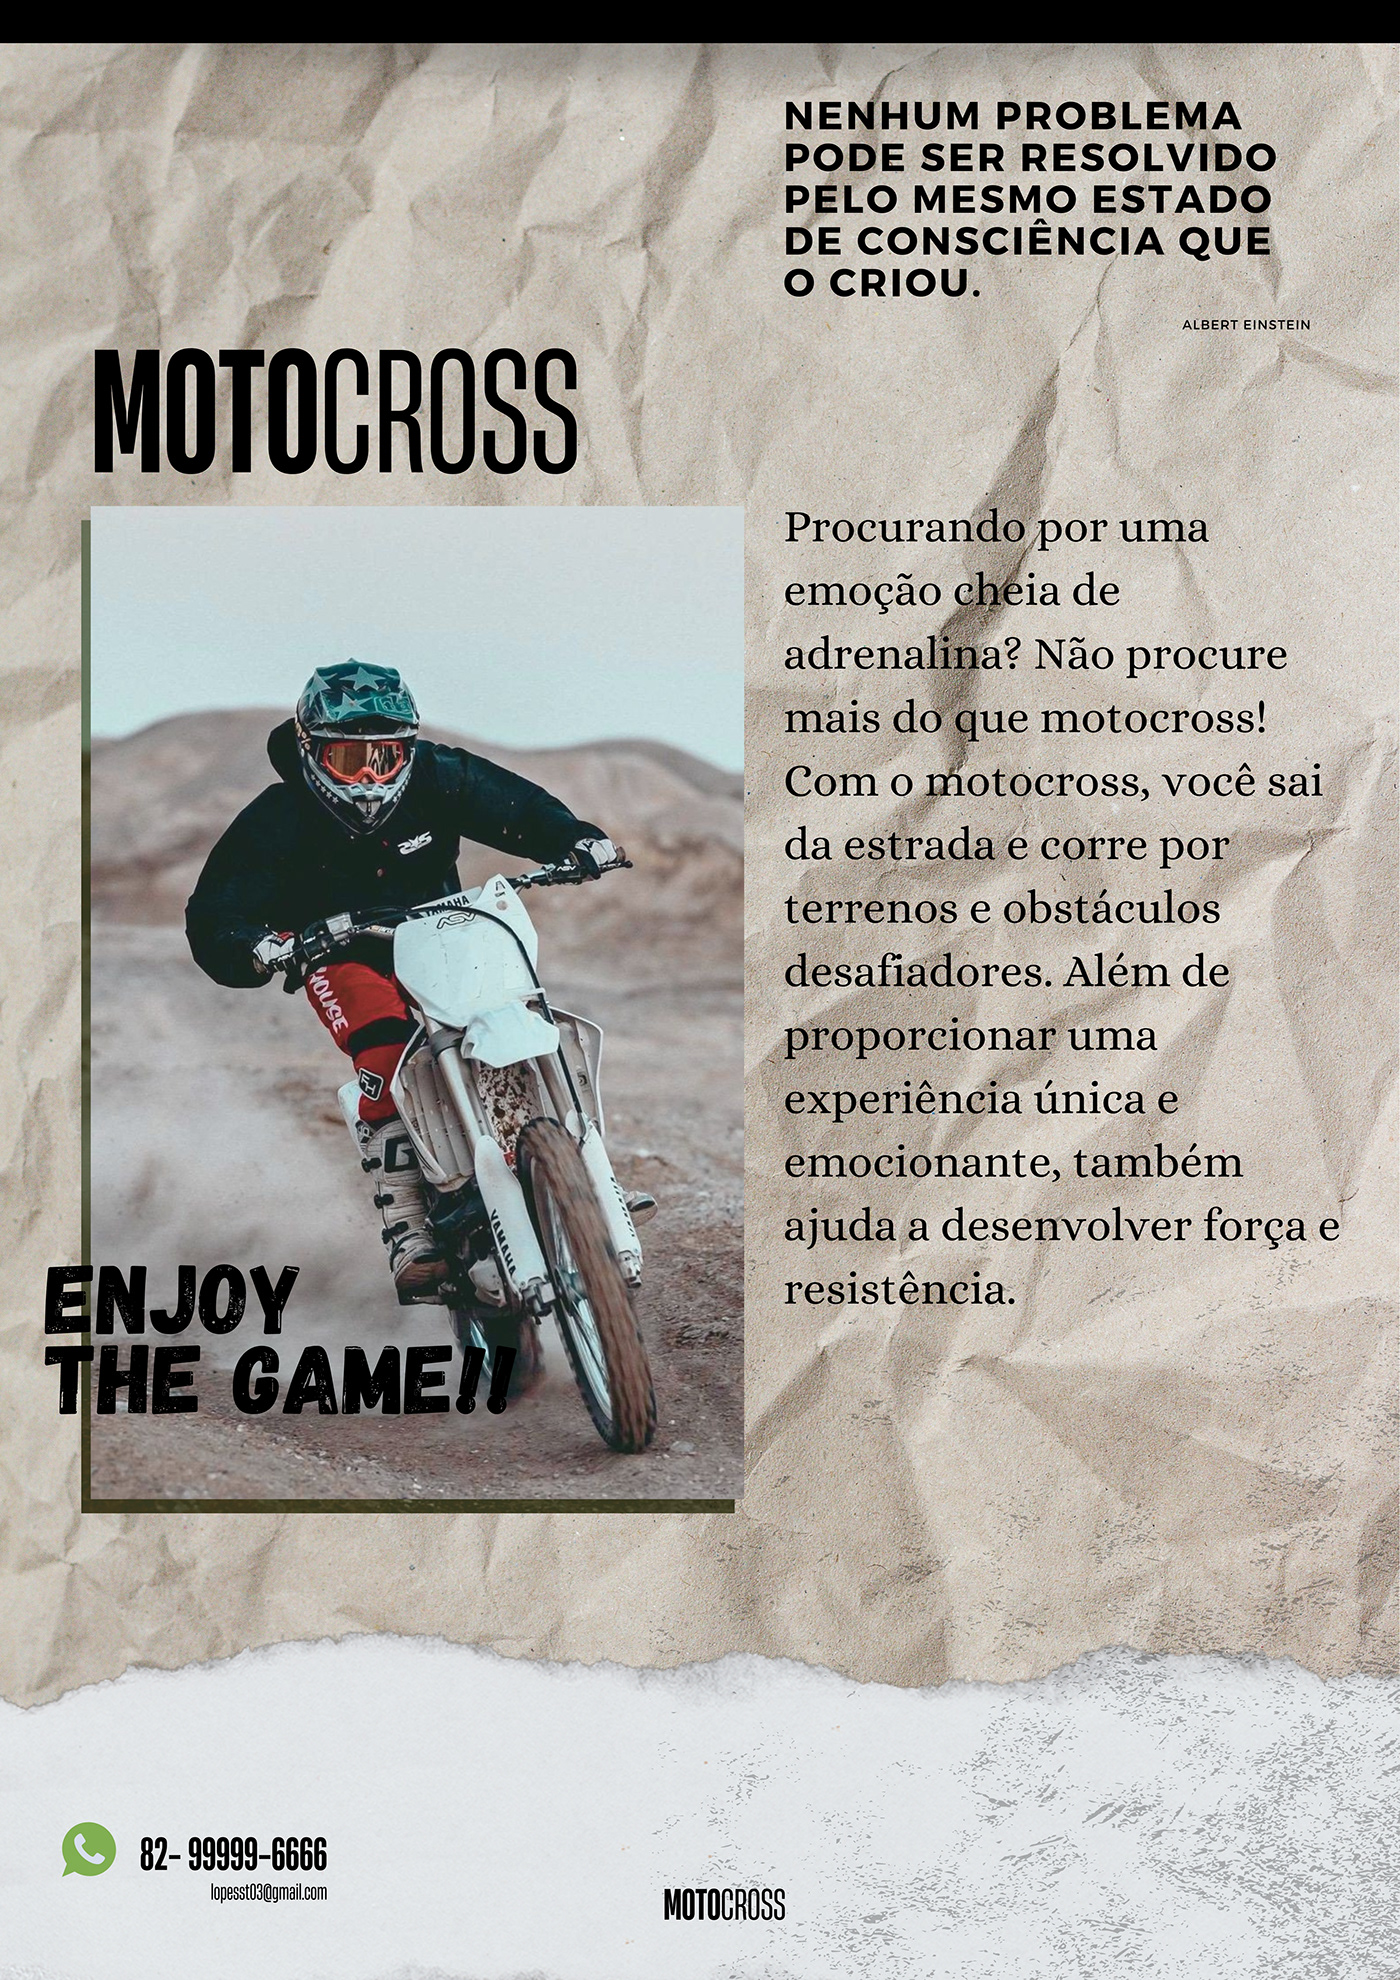 adrenalina fast game Motocross radical sport